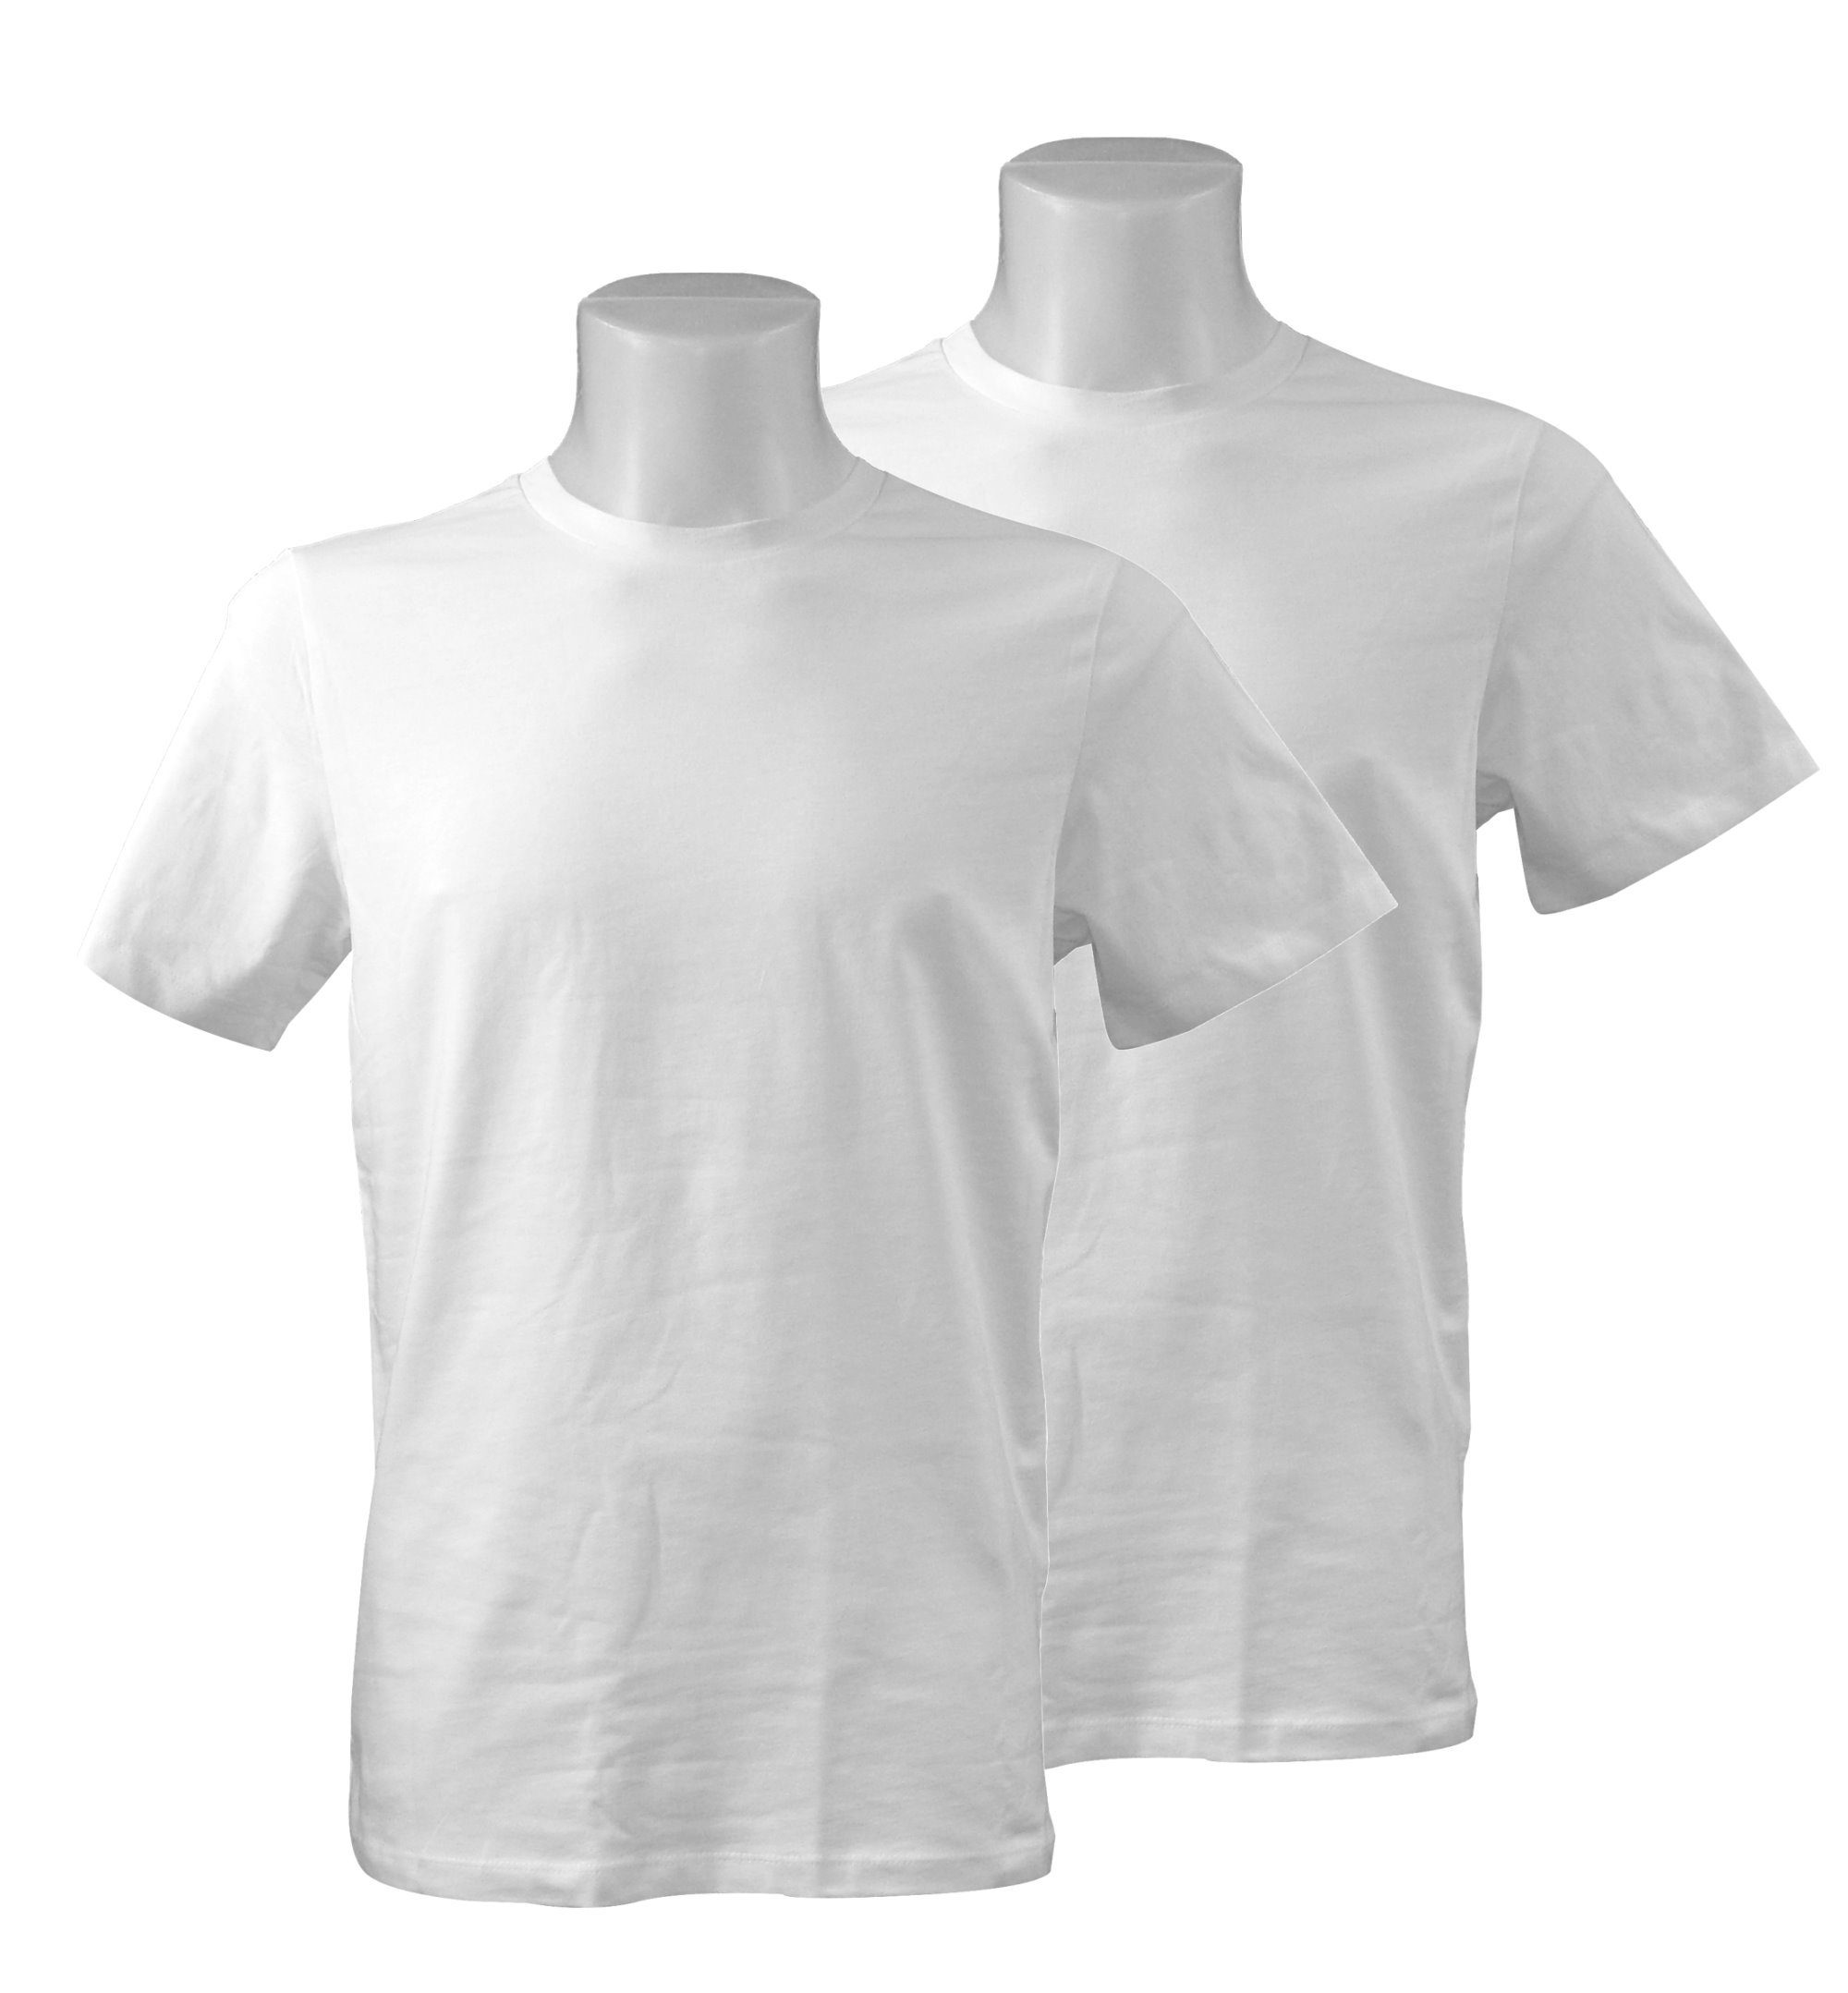 Basic 2er BIO PRODUKT T-Shirt Pack Baumwolle Kurzarm Herren Shirt weiss Doppelpack Rundhals